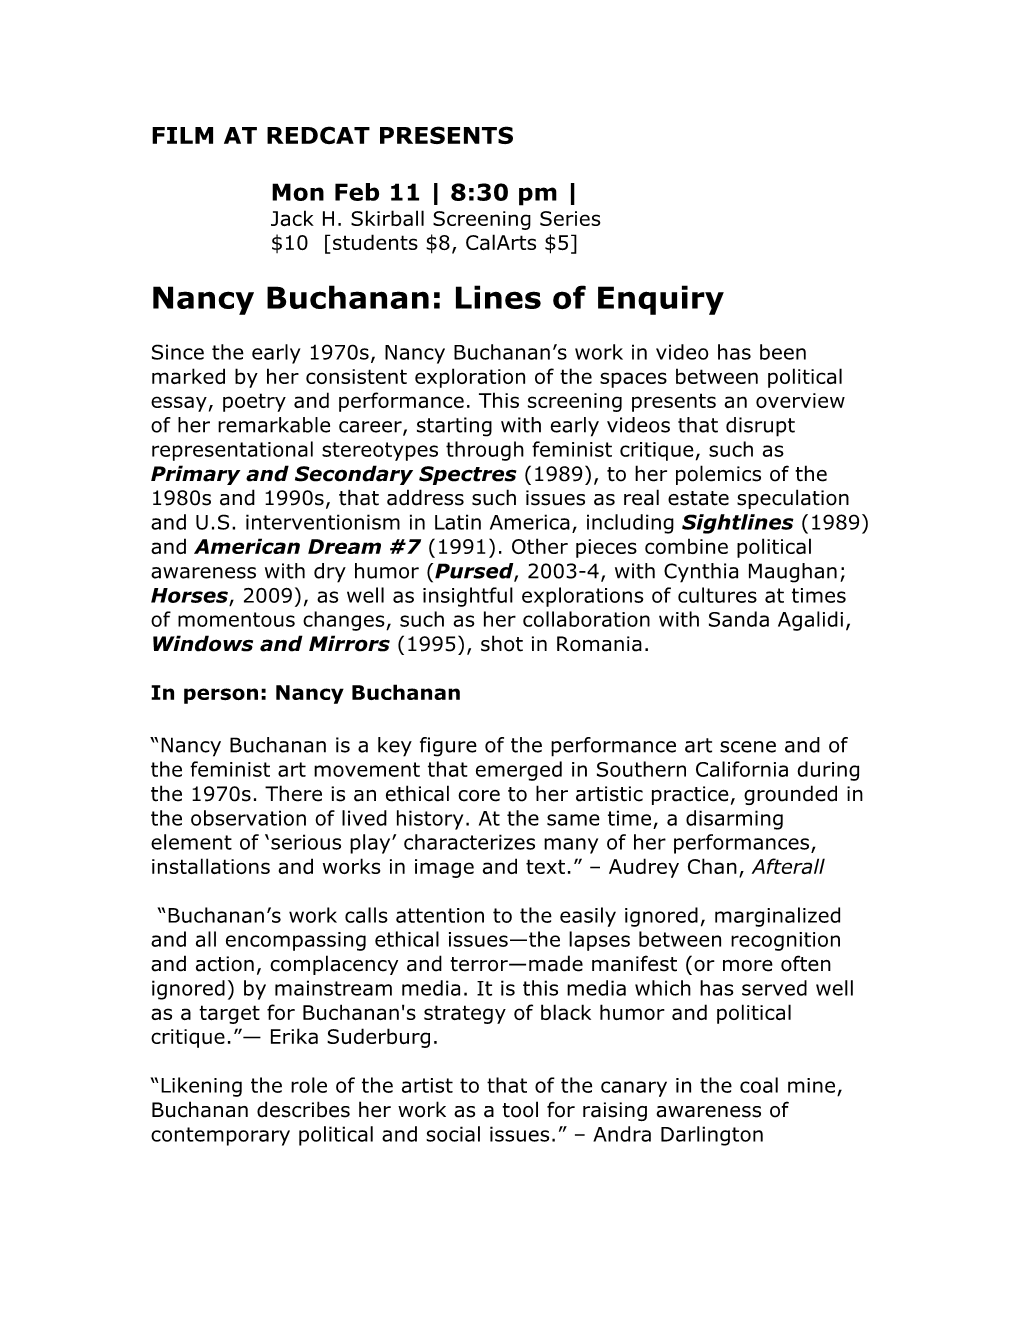 Nancy Buchanan: Lines of Enquiry